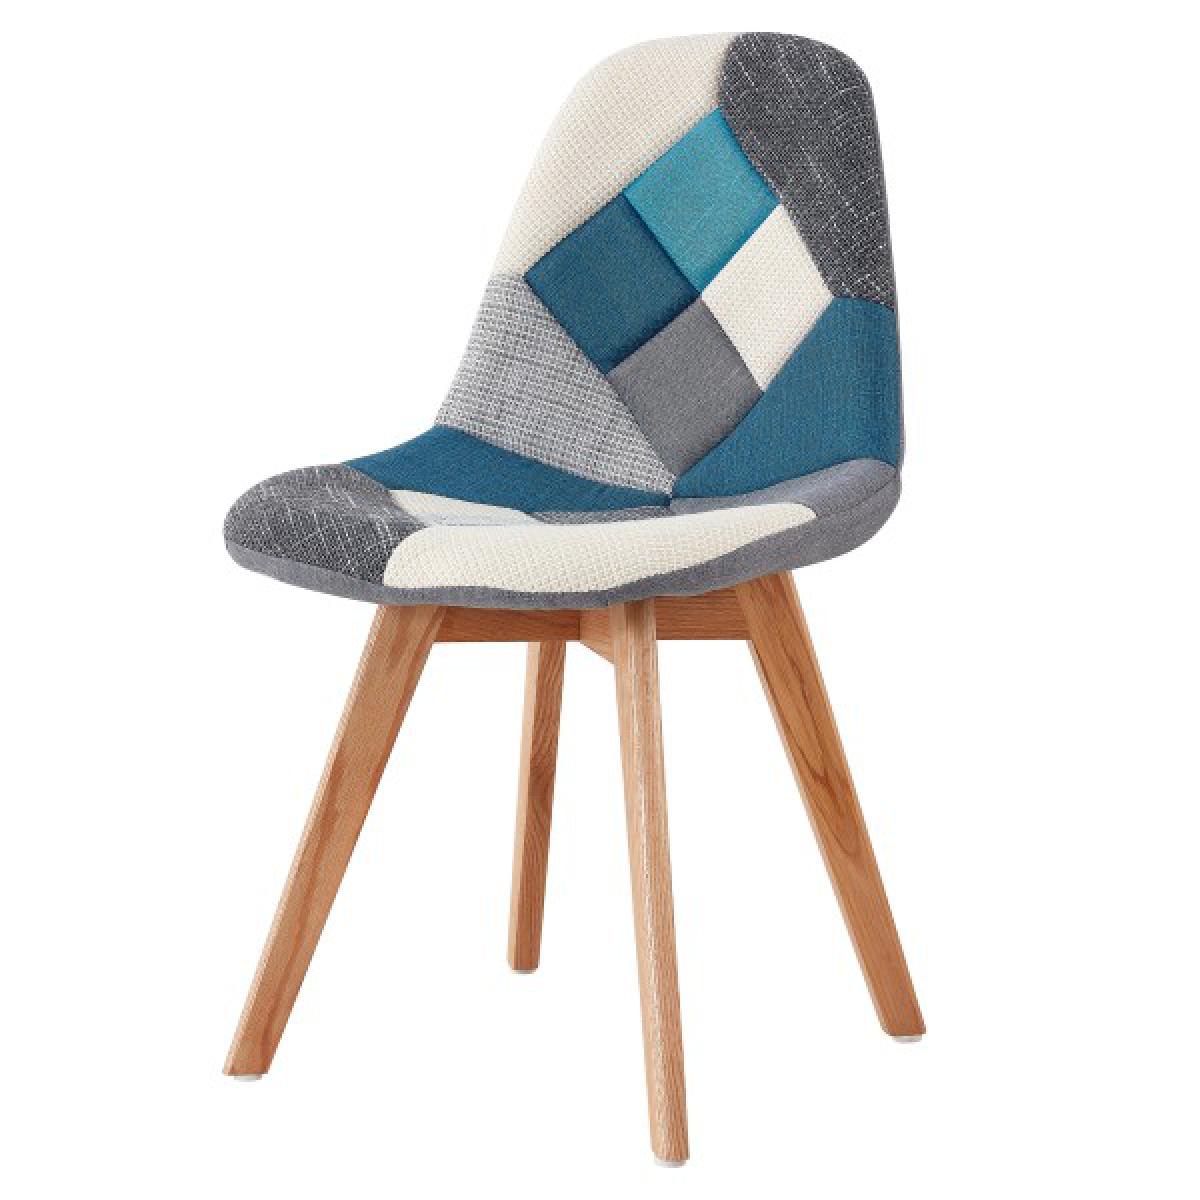 Moloo - STELLA-Chaise scandinave tissu patchwork bleu pieds hêtre - Chaises